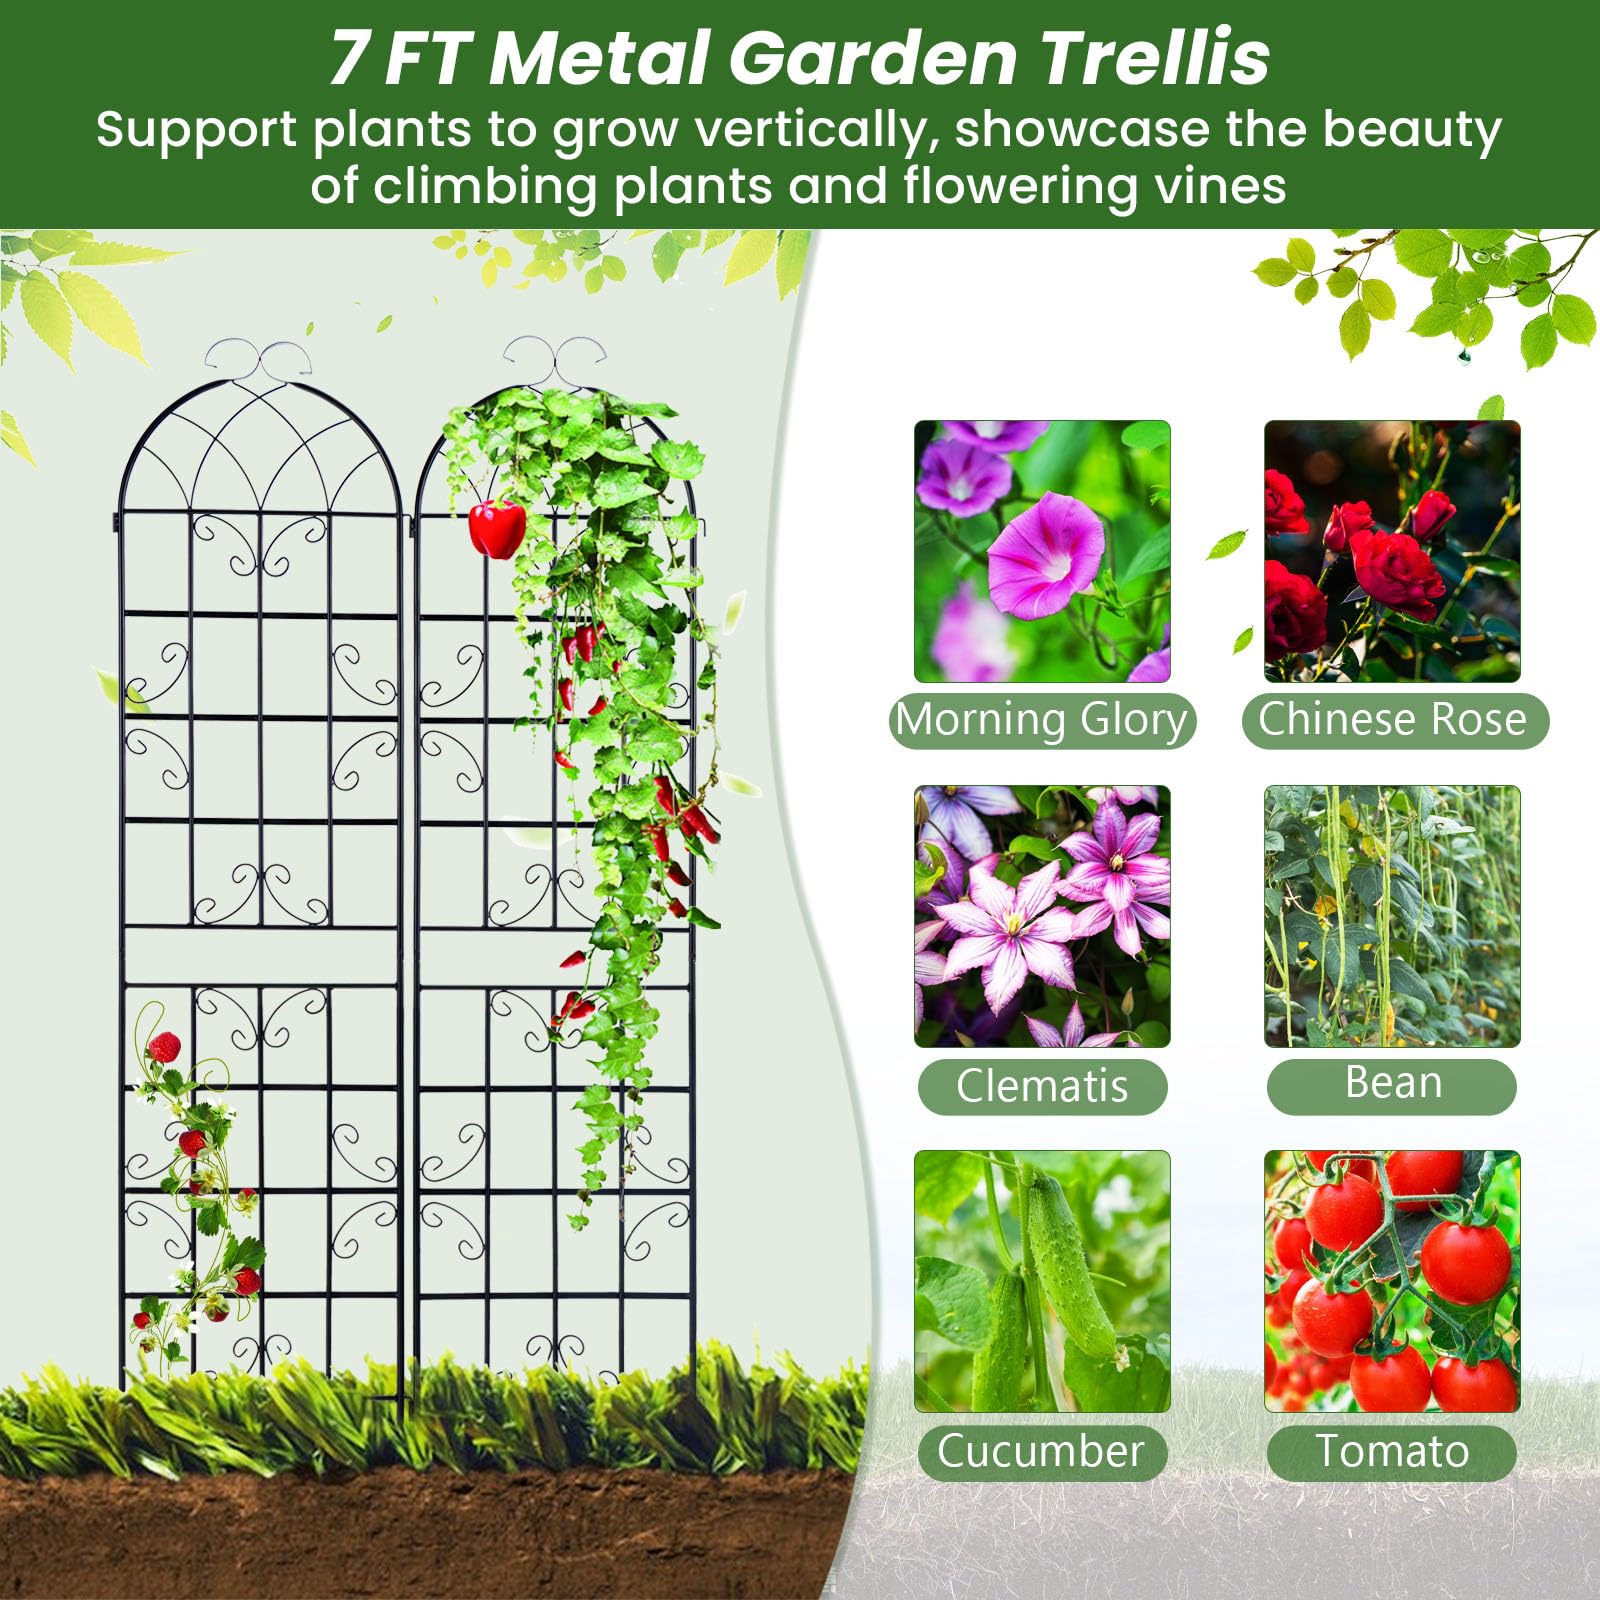 Giantex 2 Pack Trellis for Climbing Plants Outdoor, 7 FT Tall Galvanized Steel Garden Trellis